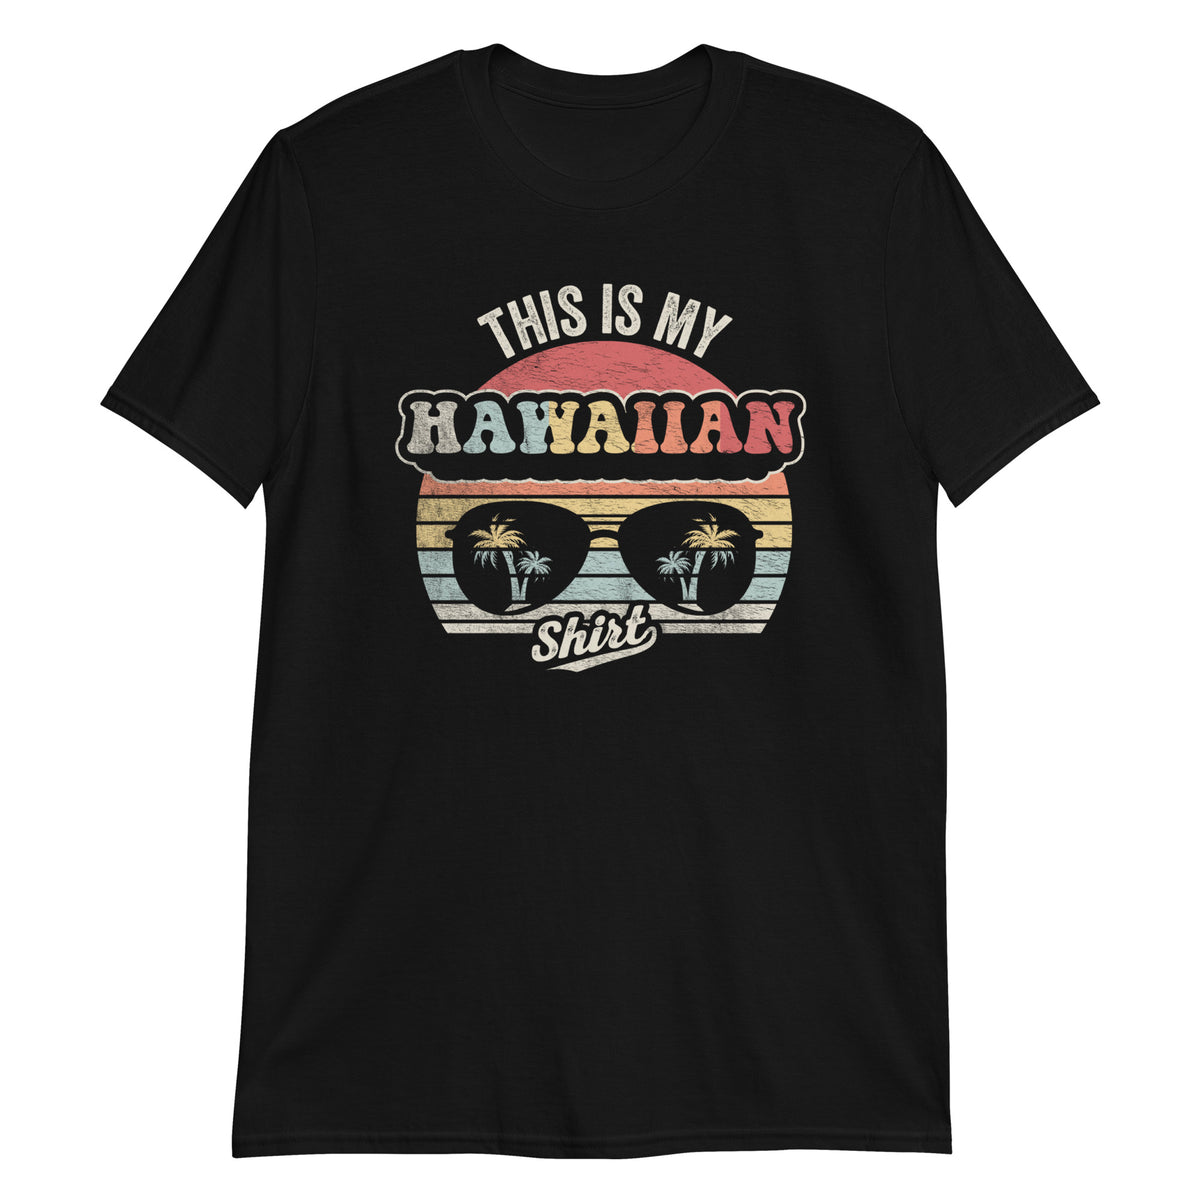 This is My Hawaiian Shirt T-Shirt